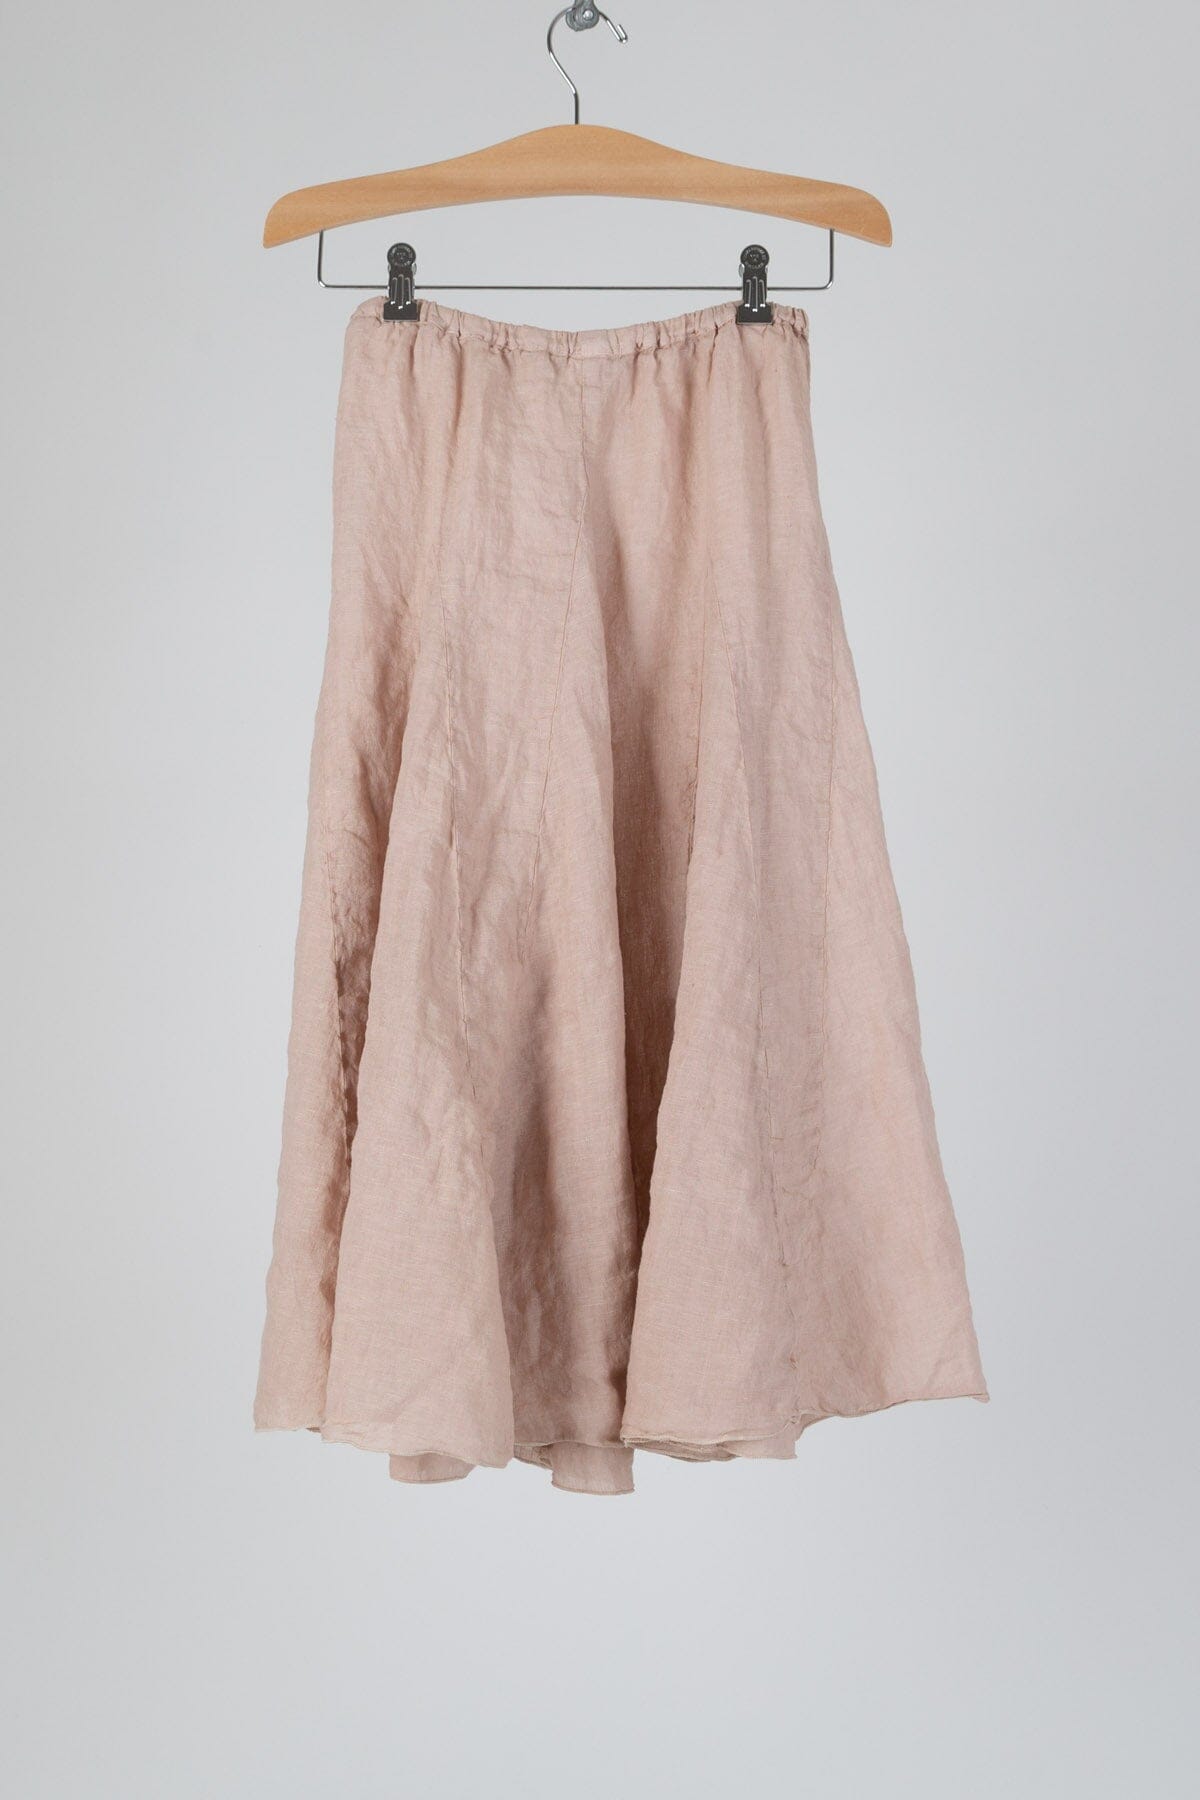 Fanny - Iridescent Linen S15 - Iridescent Skirts/Dresses CP Shades 